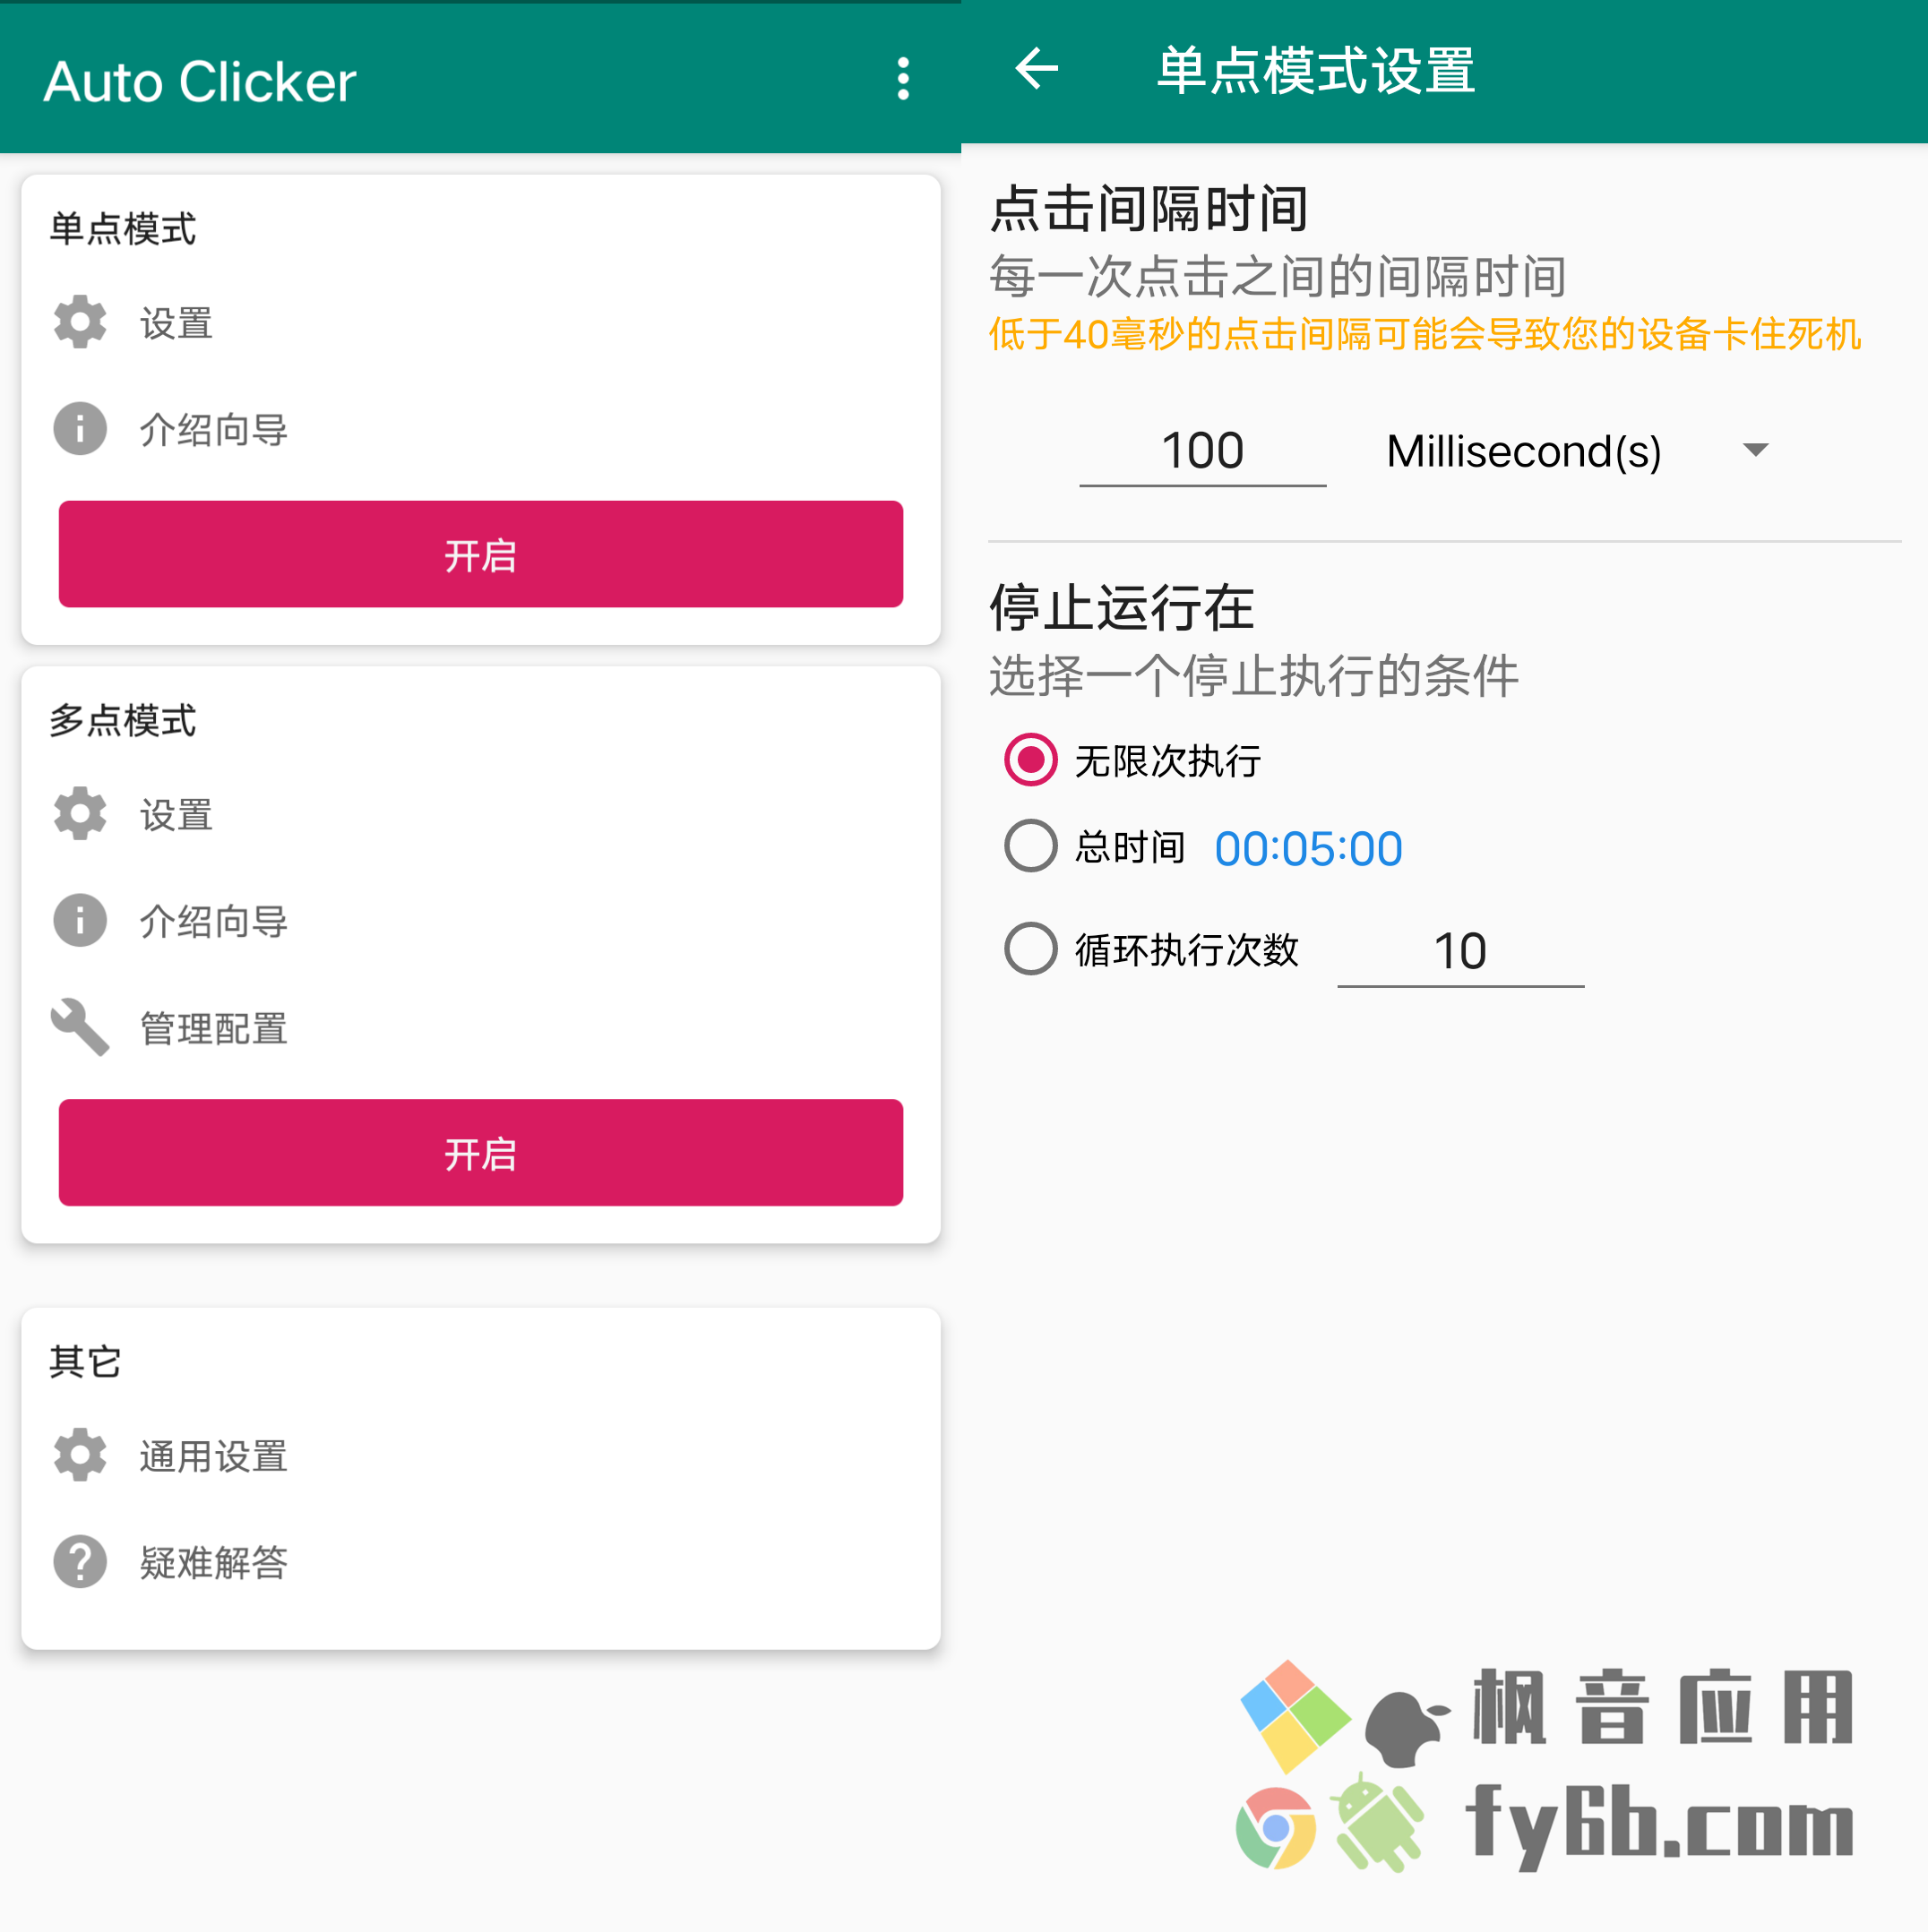 Android Auto Clicker自动点击器_1.4.3 清爽版